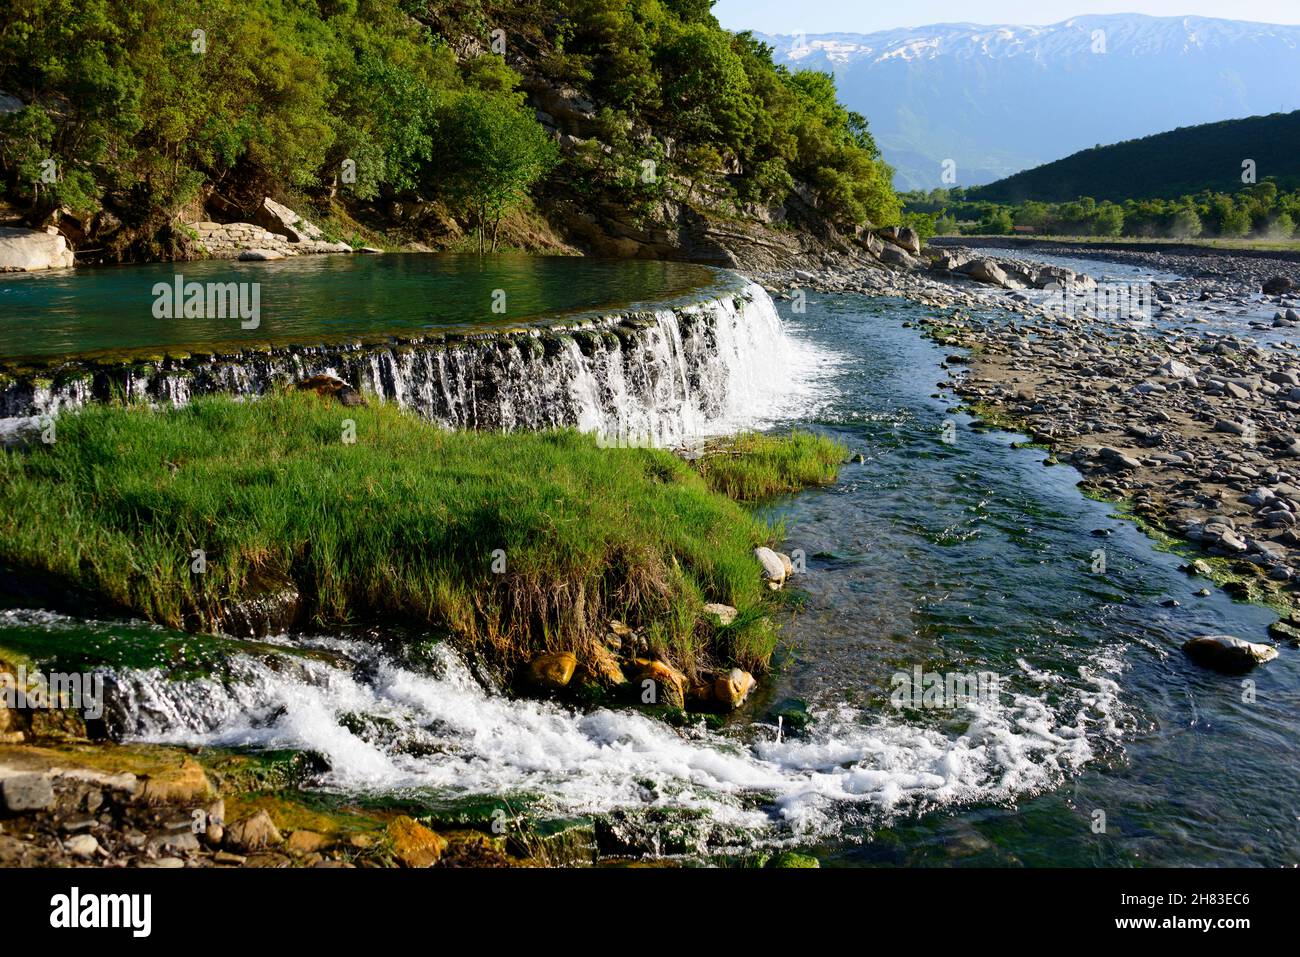 Schwefelhaltige warme Quelle, Thermalquelle, Fluss Lengarica, Benja, Albanien Stock Photo